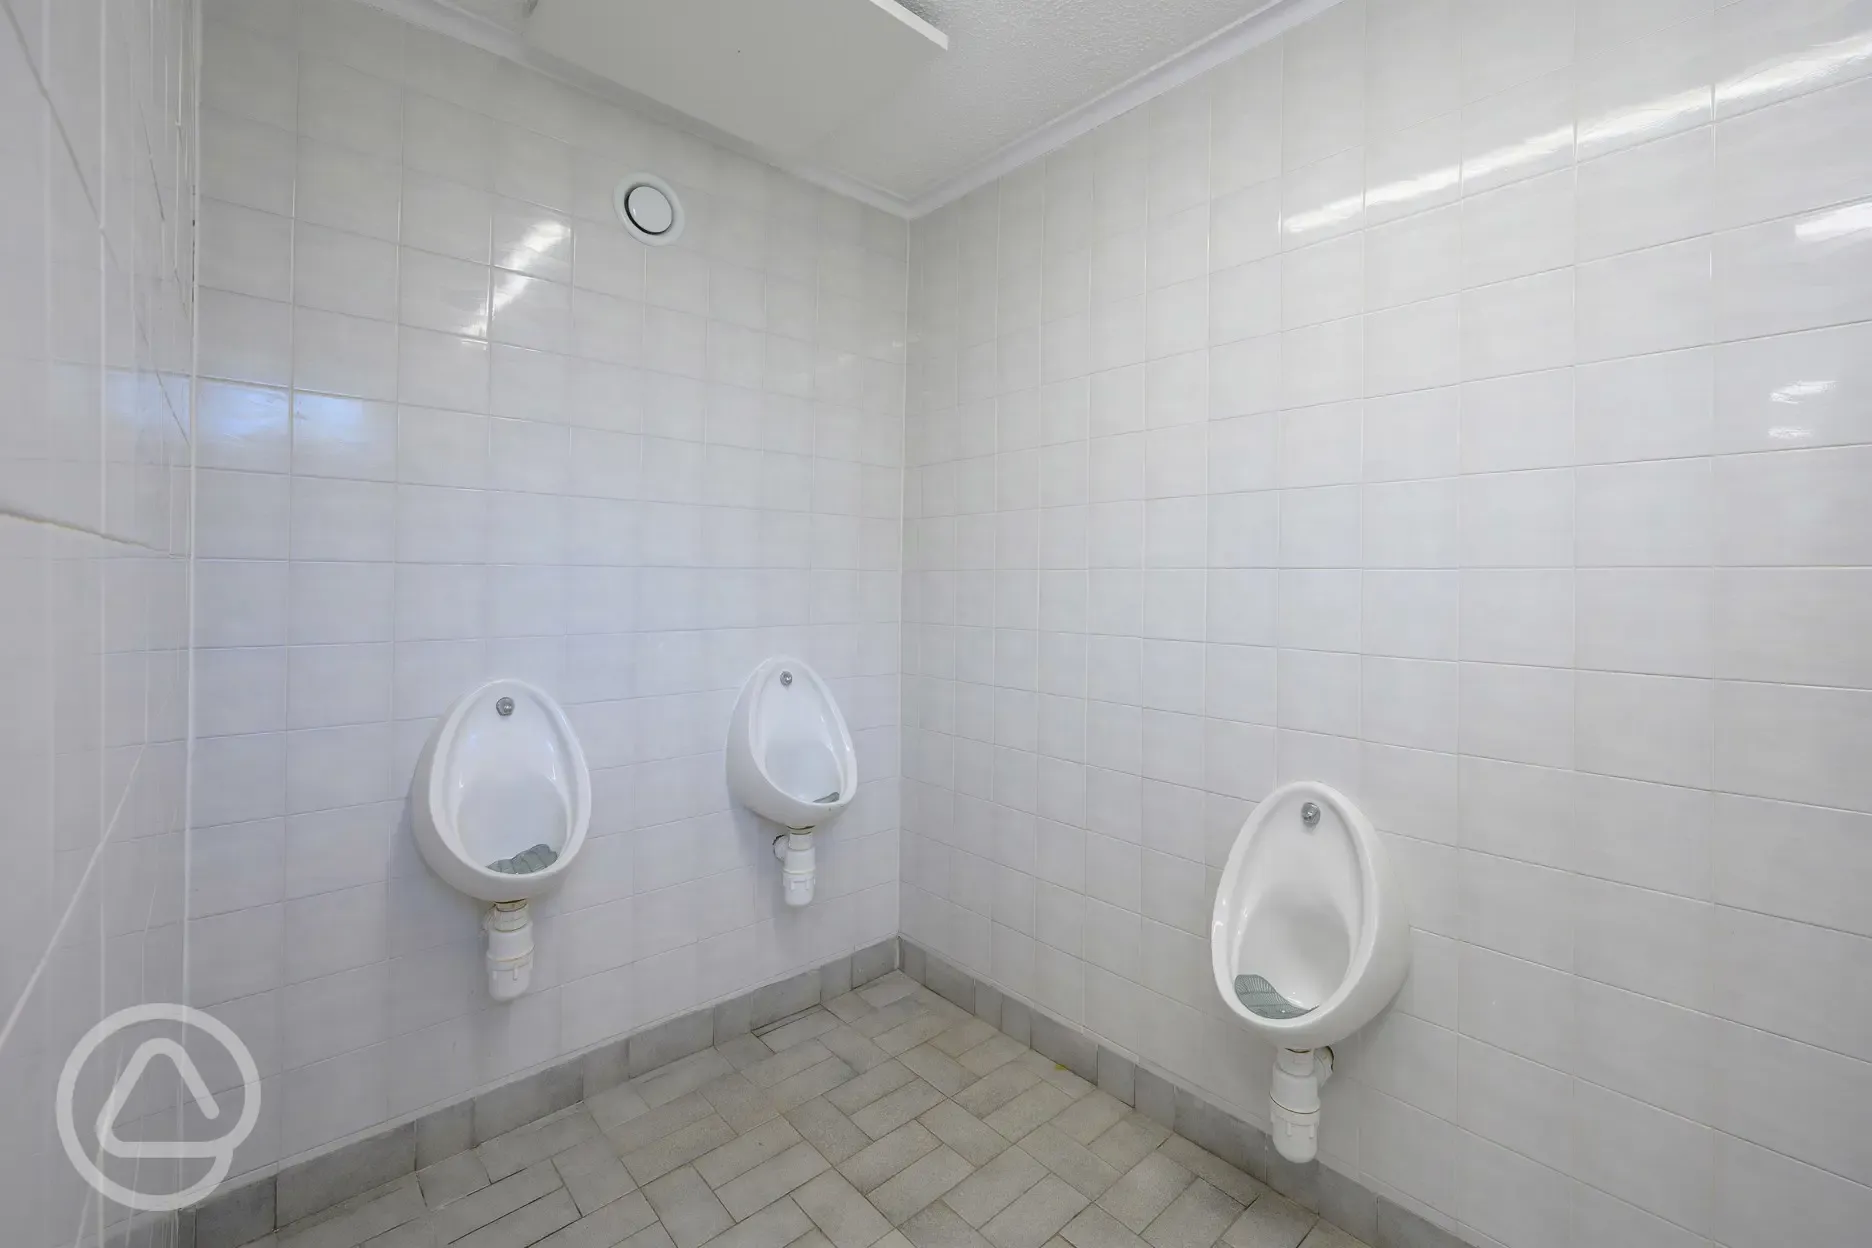 Communal mens toilets